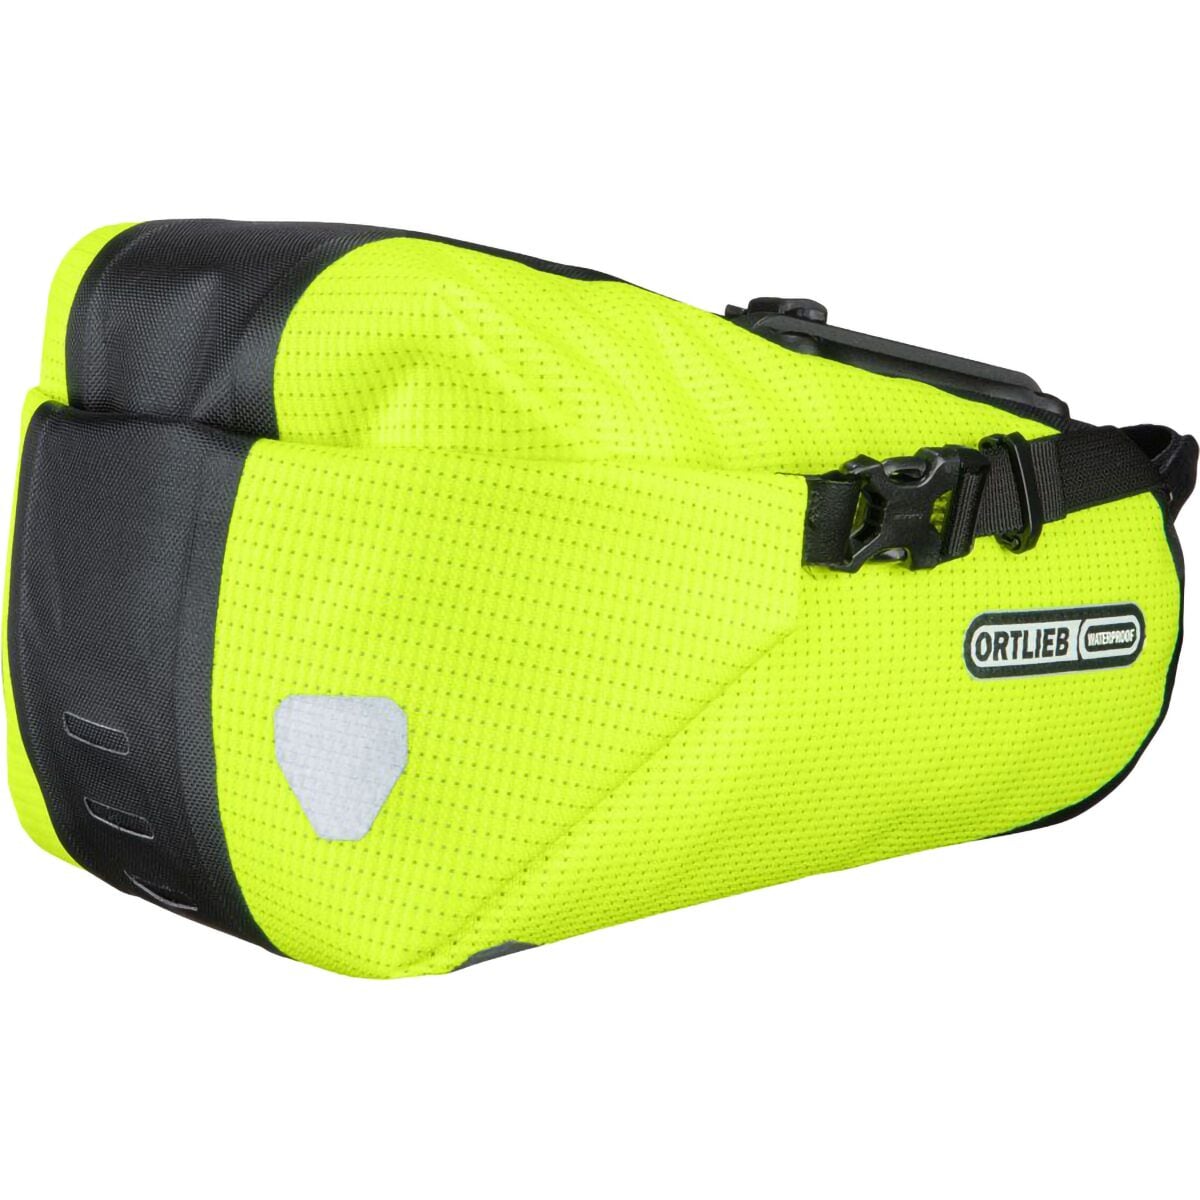 Ortlieb Saddle Bag Two High-Visibility Neon Yellow/Black Reflex, 4.1L